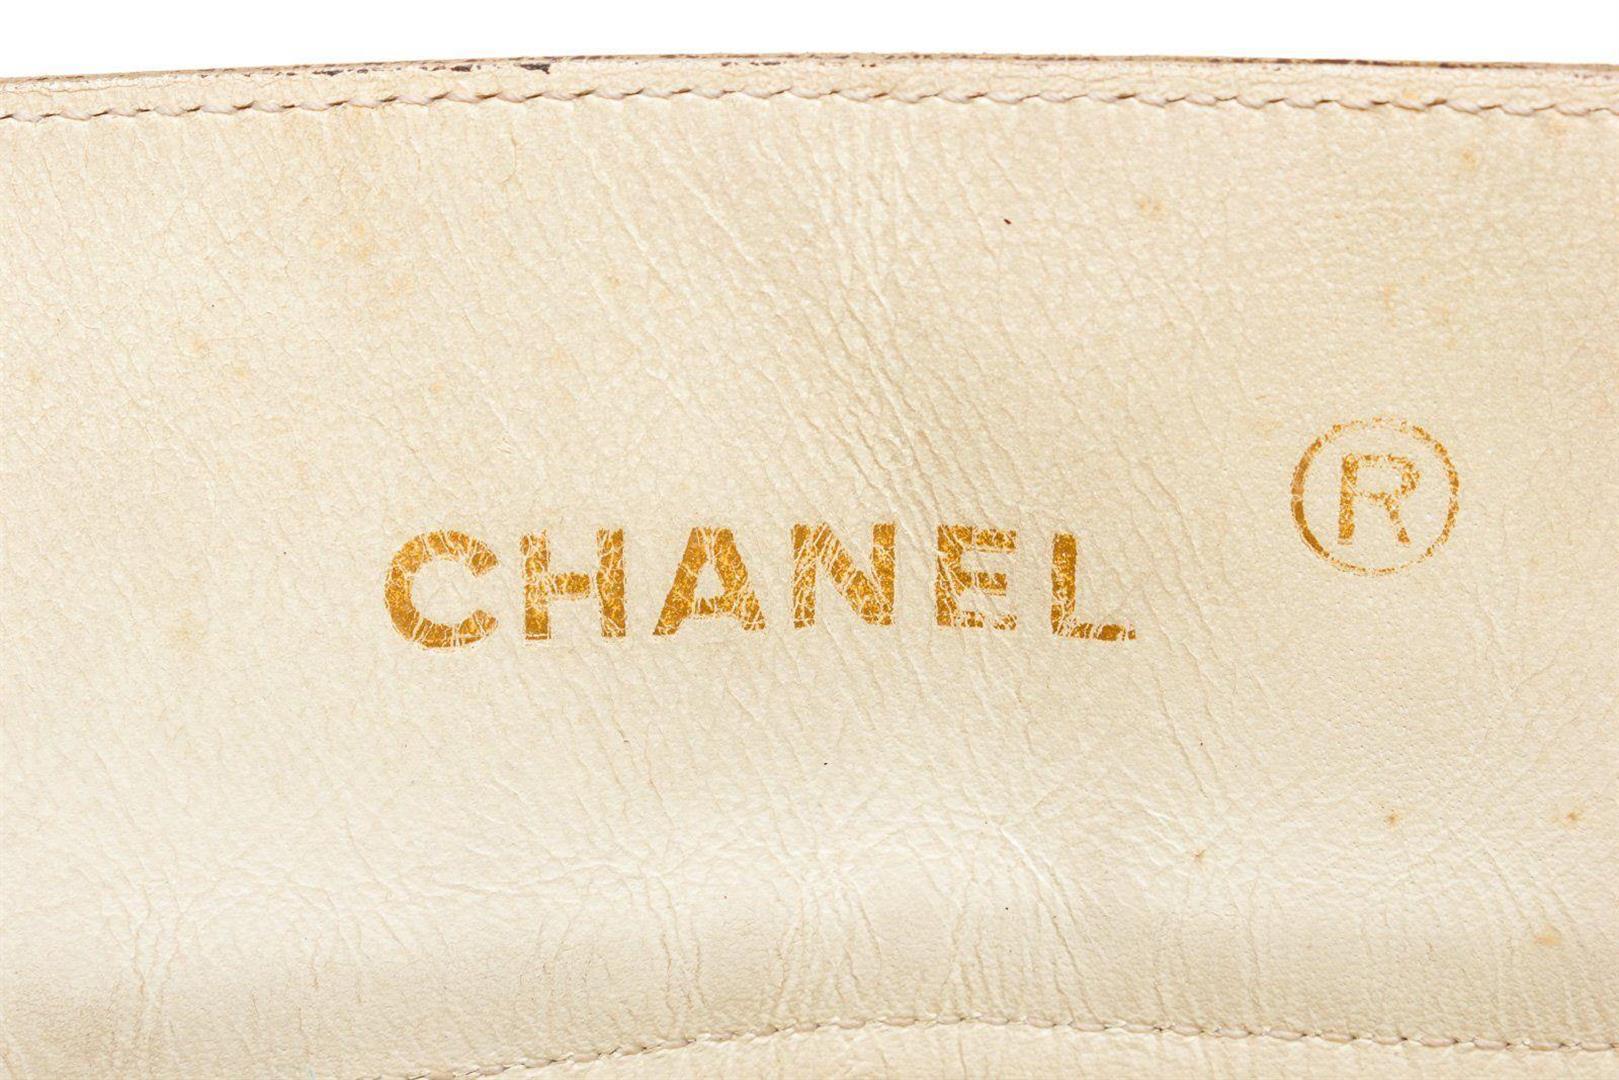 Chanel White Vintage CC Flat Chain Shoulder Bag